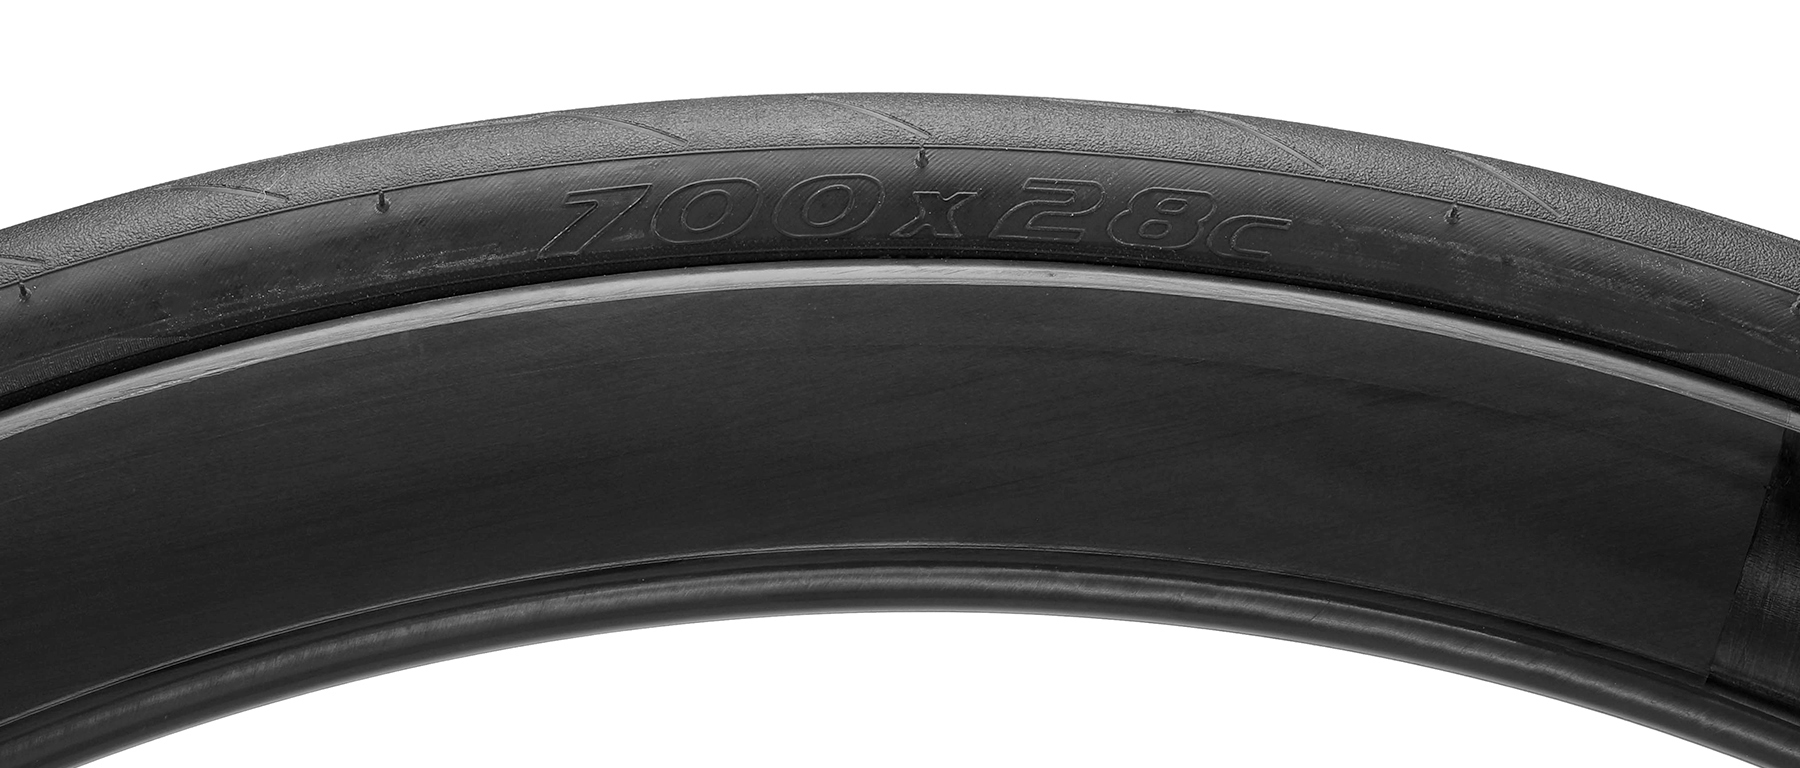 Pirelli P Zero Race Road Tire 2-Pack